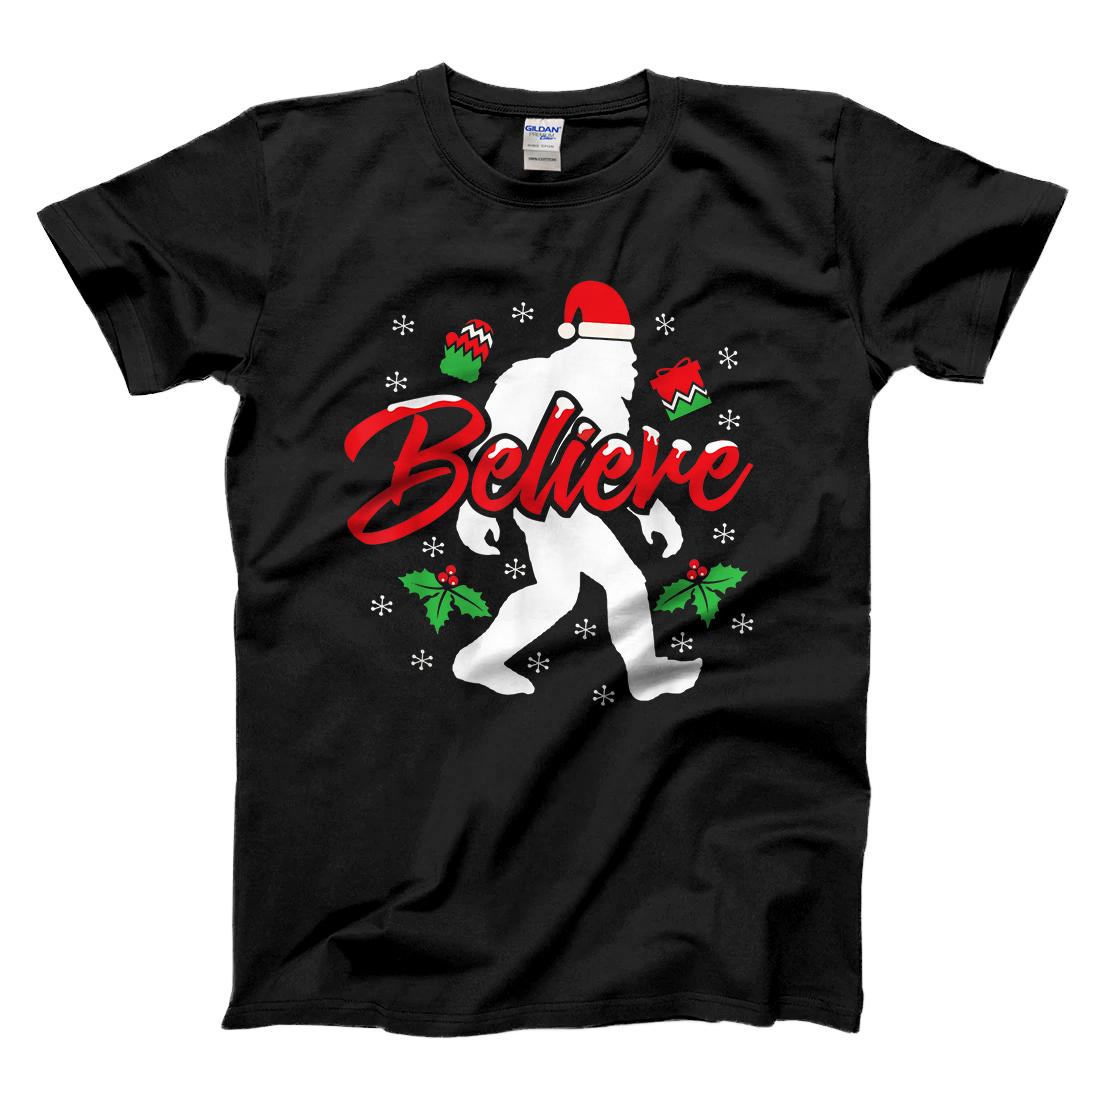 Personalized Bigfoot Christmas Shirt Believe Funny Boys Girls Men Gift T-Shirt